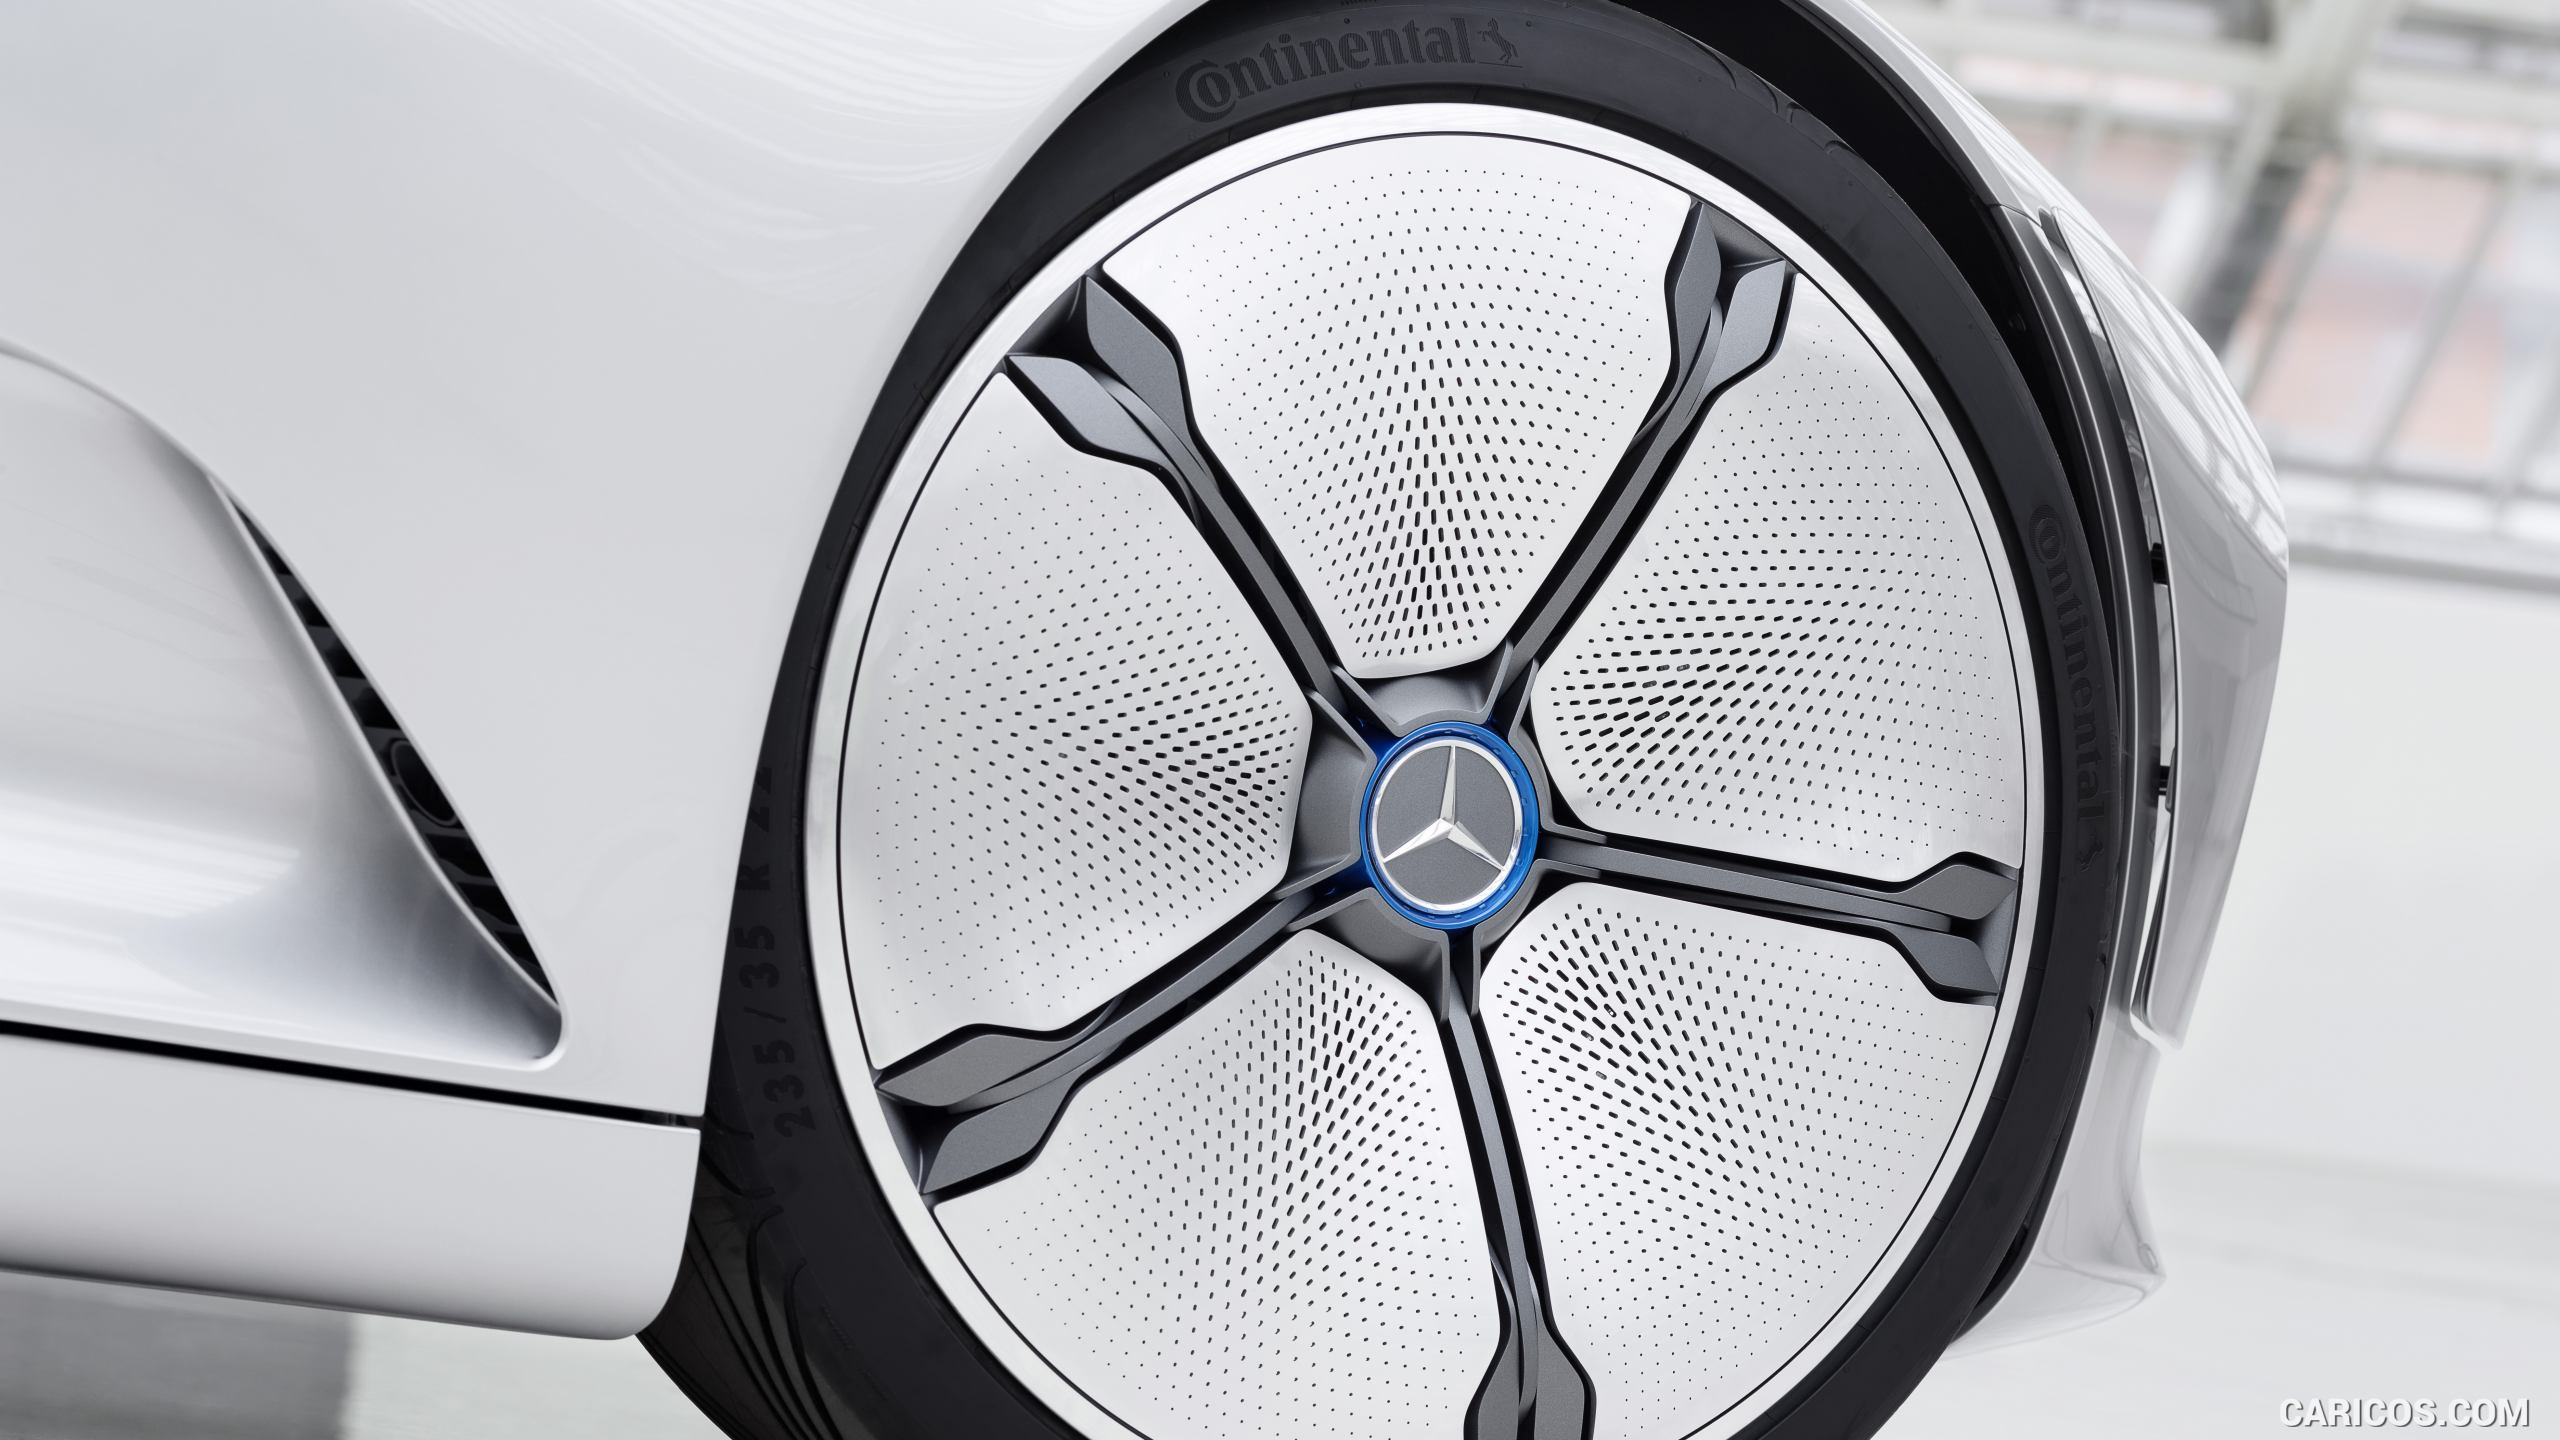 2015 Mercedes-Benz Concept IAA (Intelligent Aerodynamic Automobile) - Wheel, #36 of 49